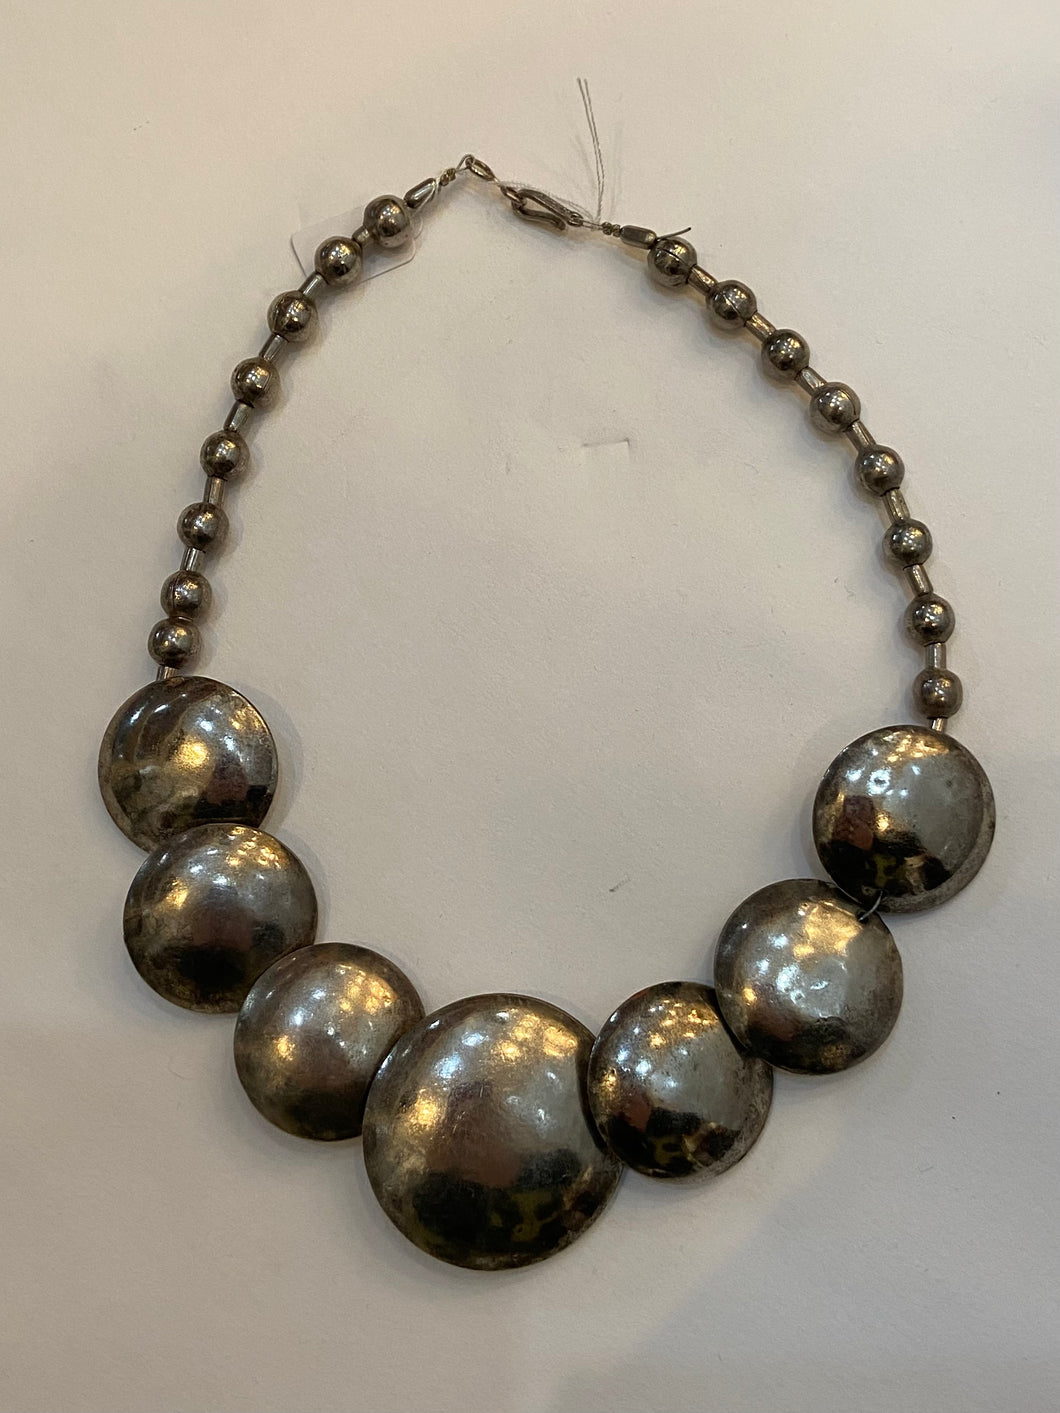 Vintage Avon silver disk necklace